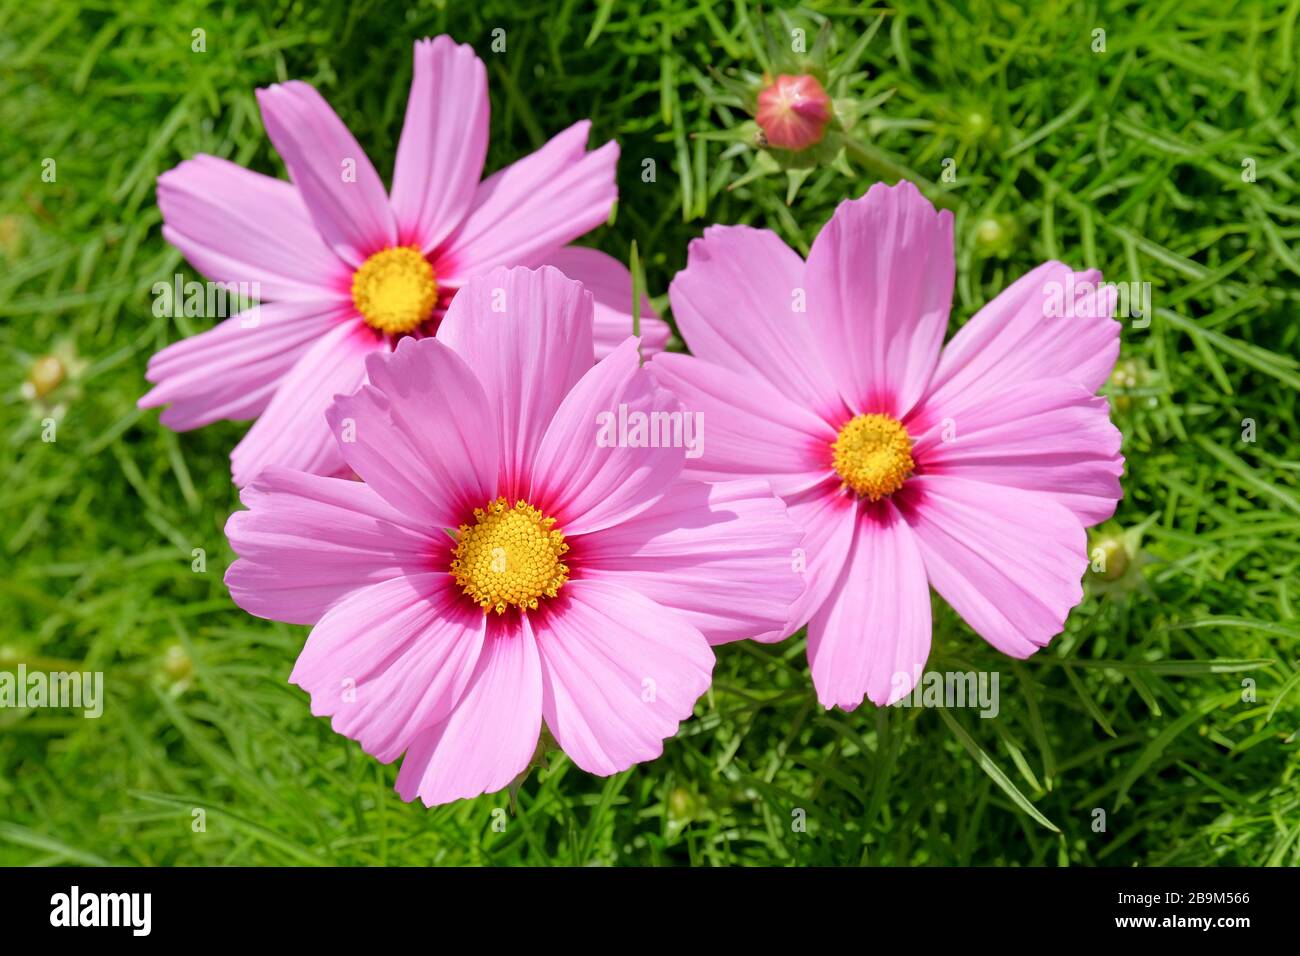 Cosmos bipinnatus 'Razzmatazz gemischt'. Nahaufnahme von drei lila rosafarbenen Blumen Stockfoto